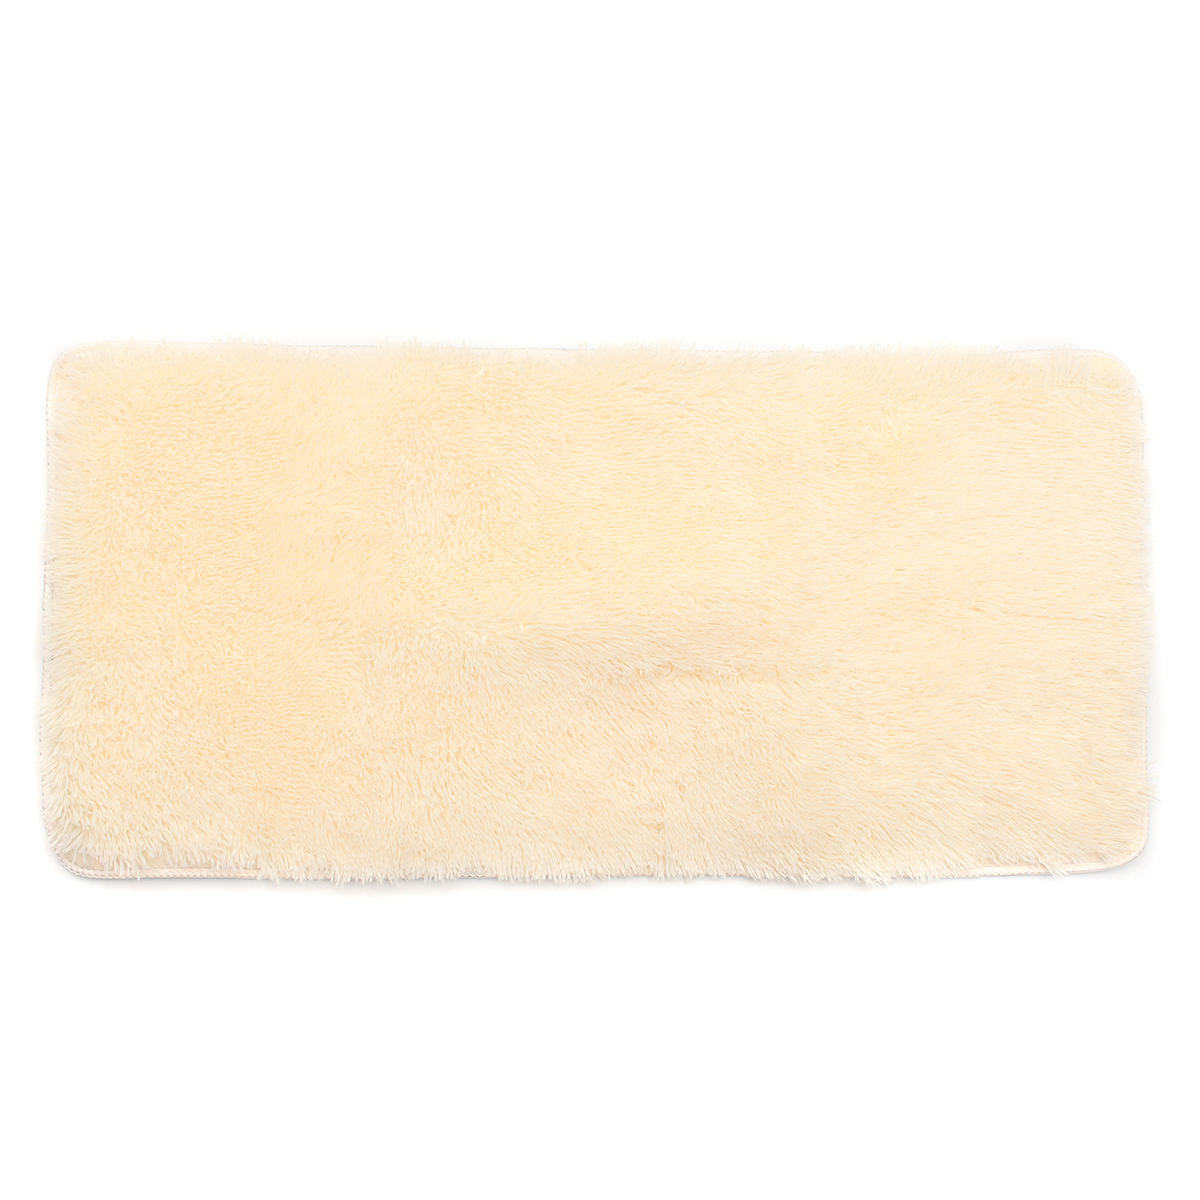 Soft-Fluffy-Rugs-Anti-Skid-Shaggy-Area-Rug-Home-Bedroom-Floor-Area-Carpet-1604512-6